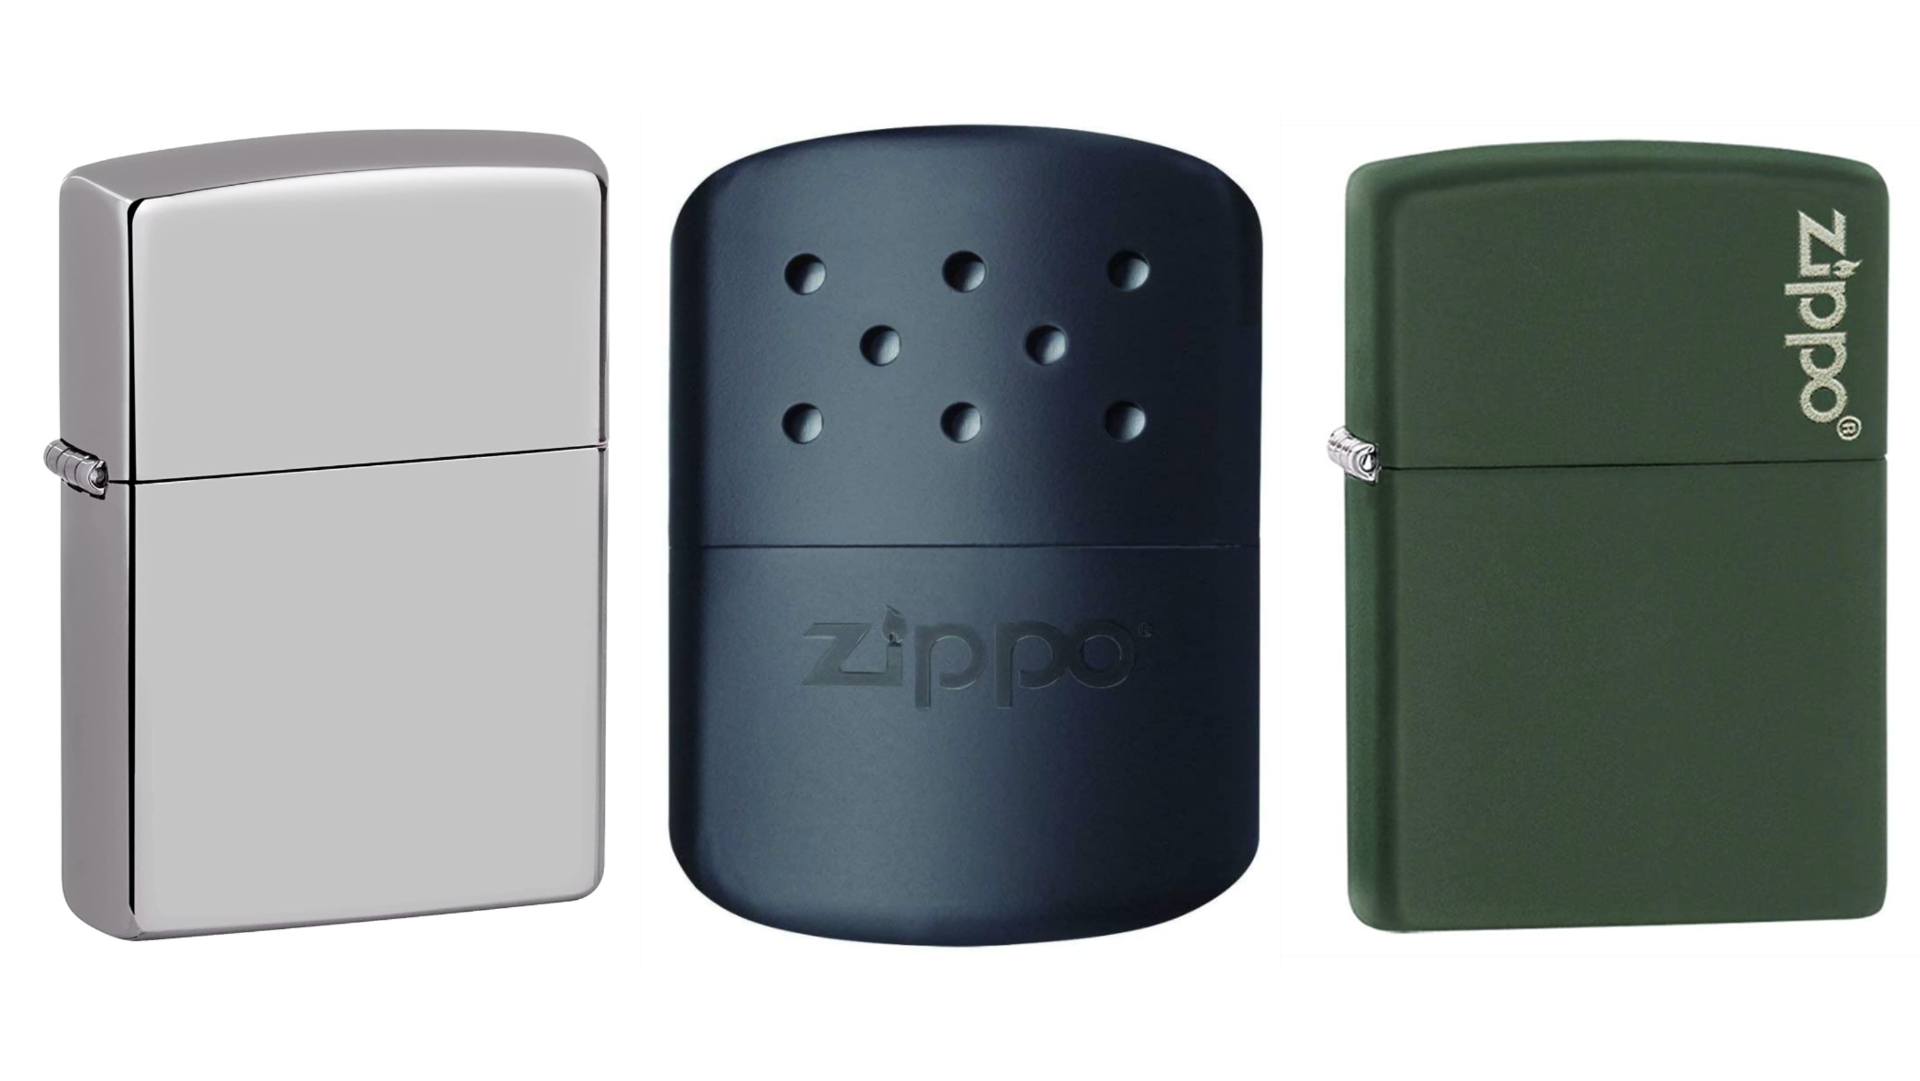 Zippo 12-Hour High Polish Chrome Refillable Hand Warmer